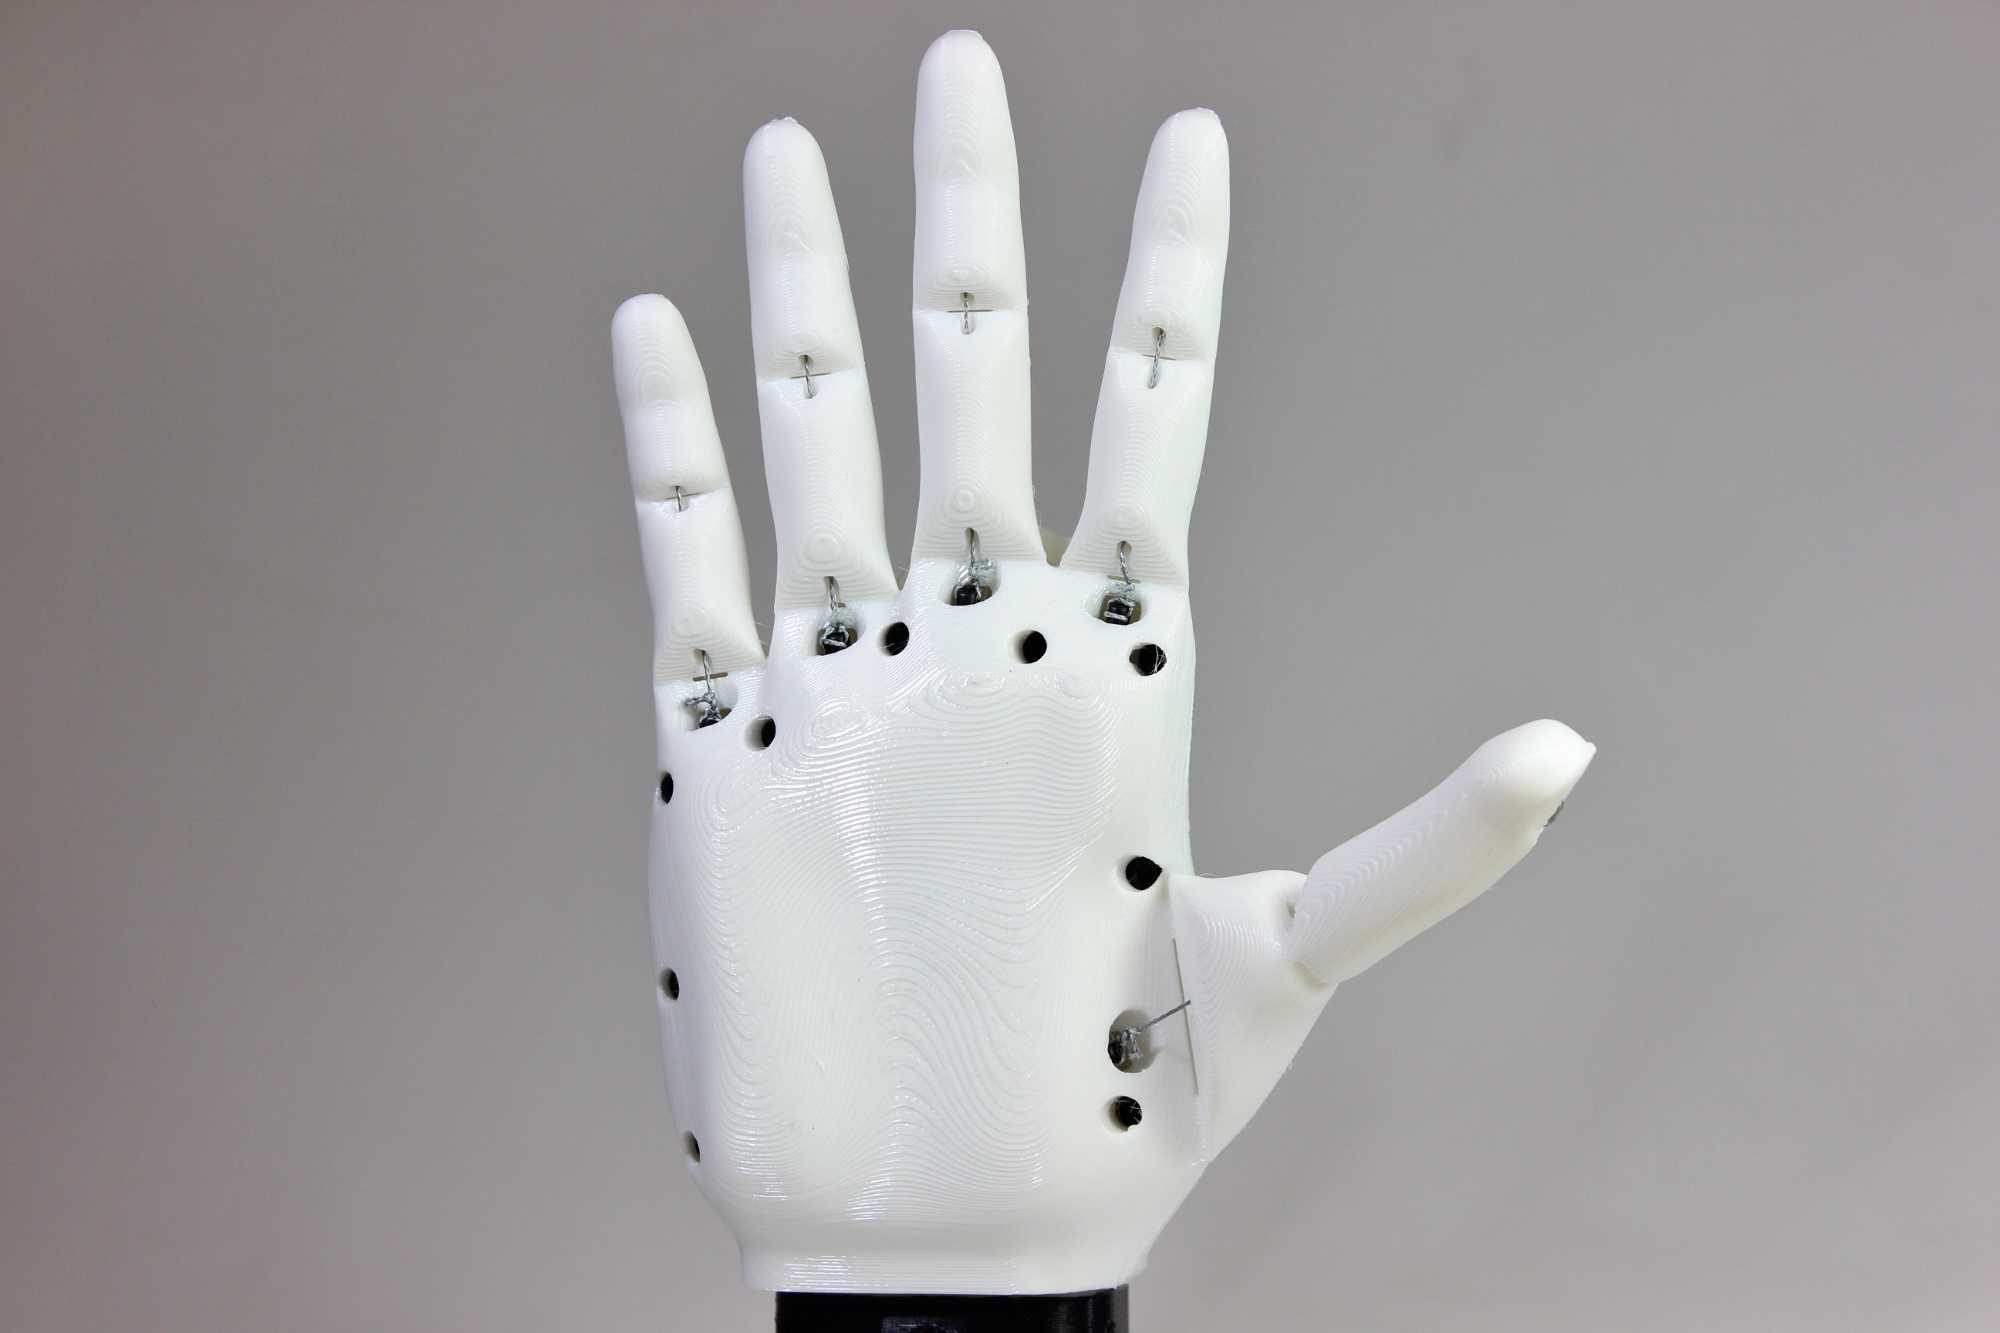 3д-модель протез кисти руки человека